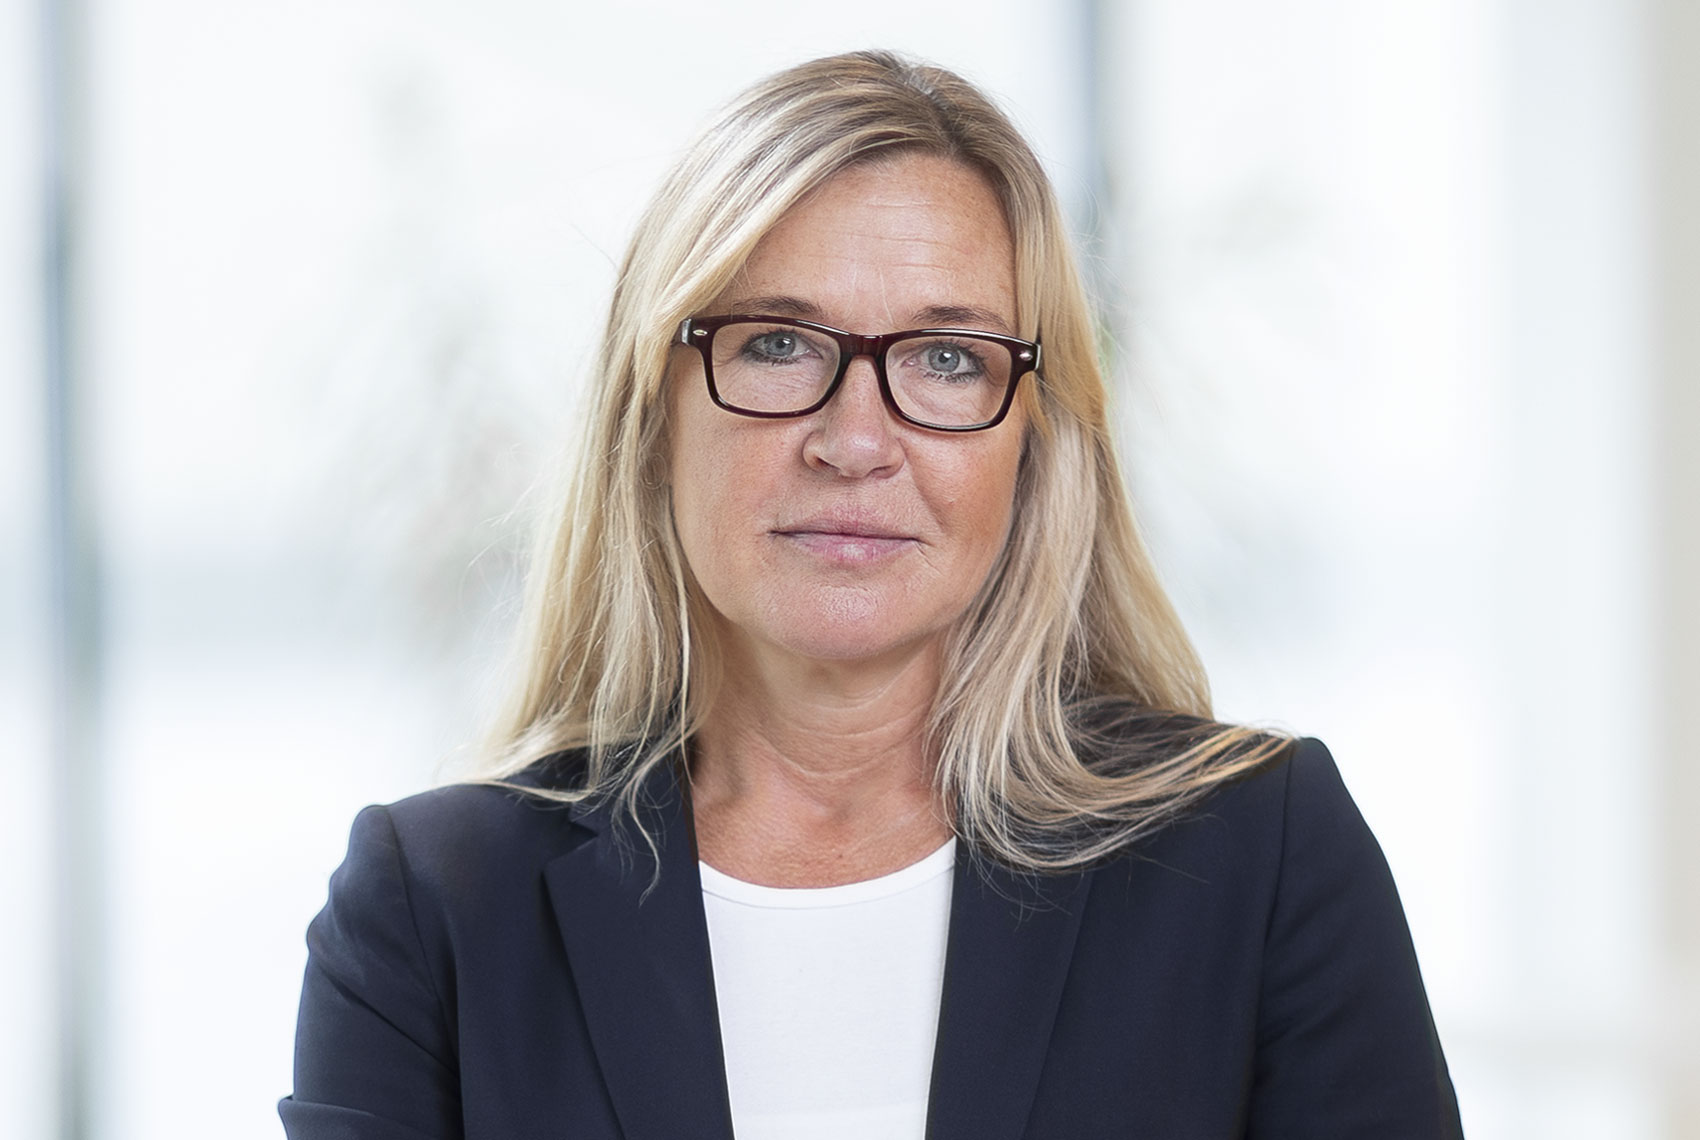 Heidi Stenström, Press Officer